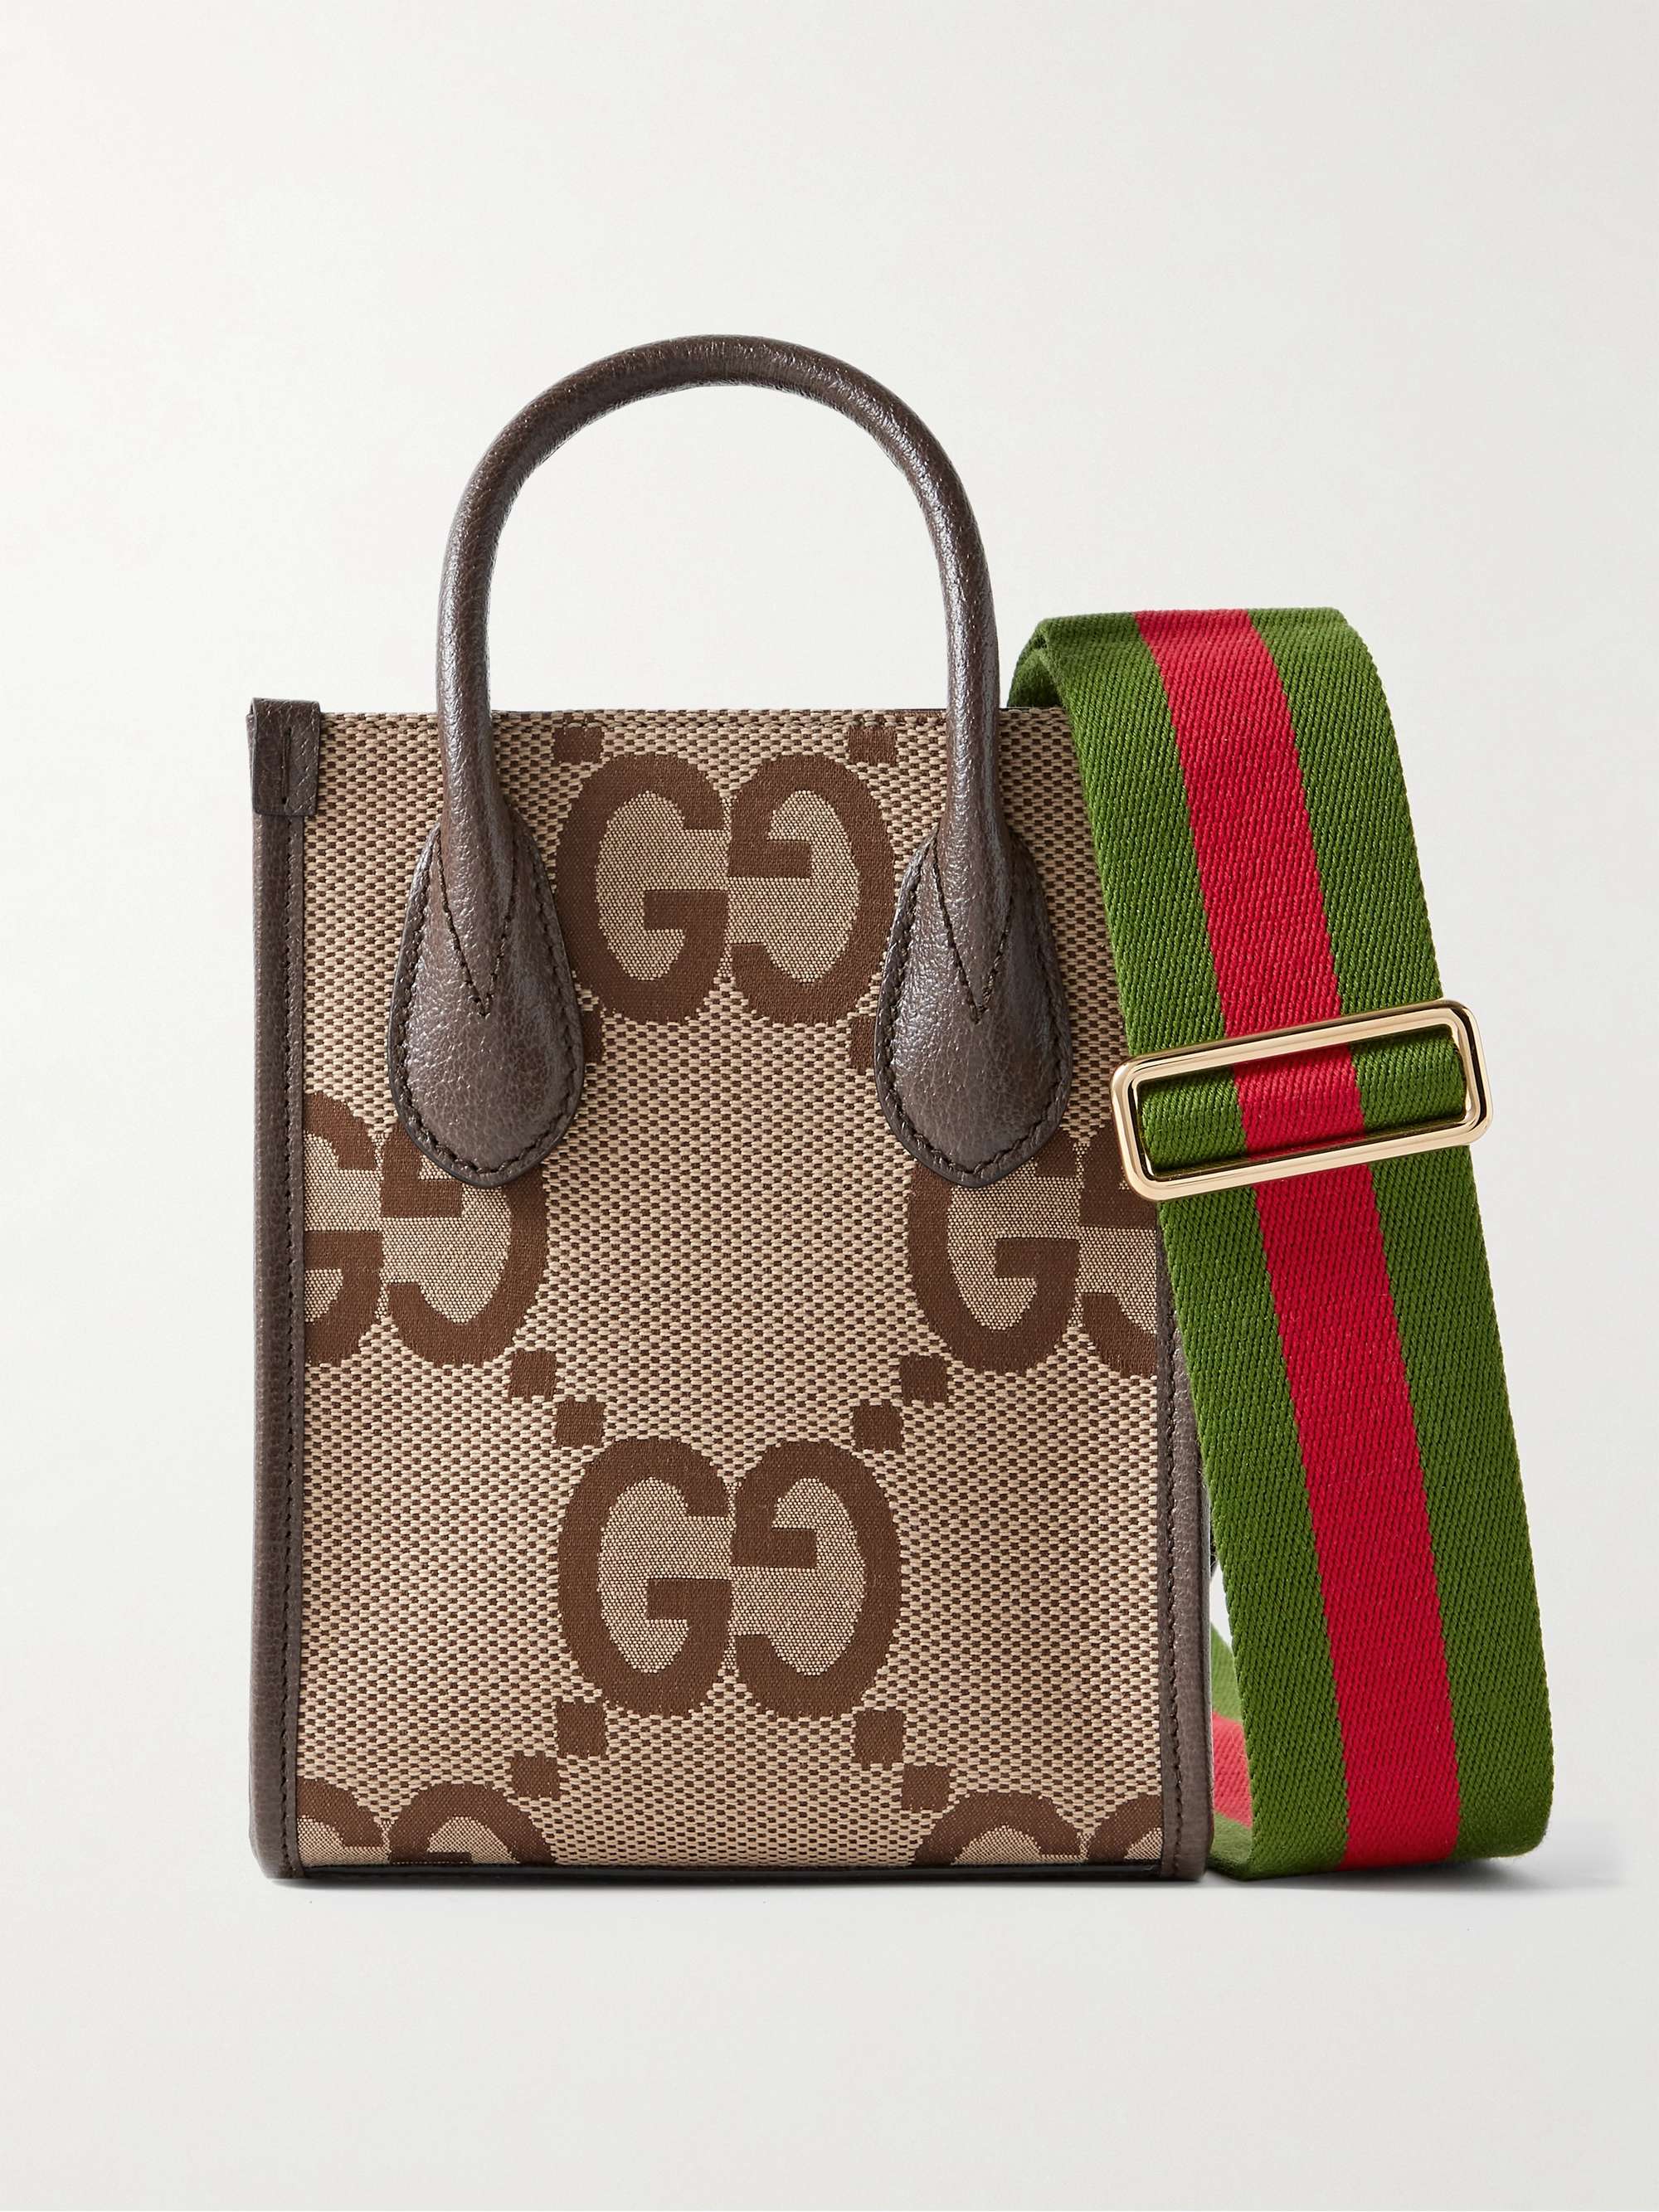 GUCCI Leather-Trimmed Monogrammed Coated-Canvas Messenger Bag for